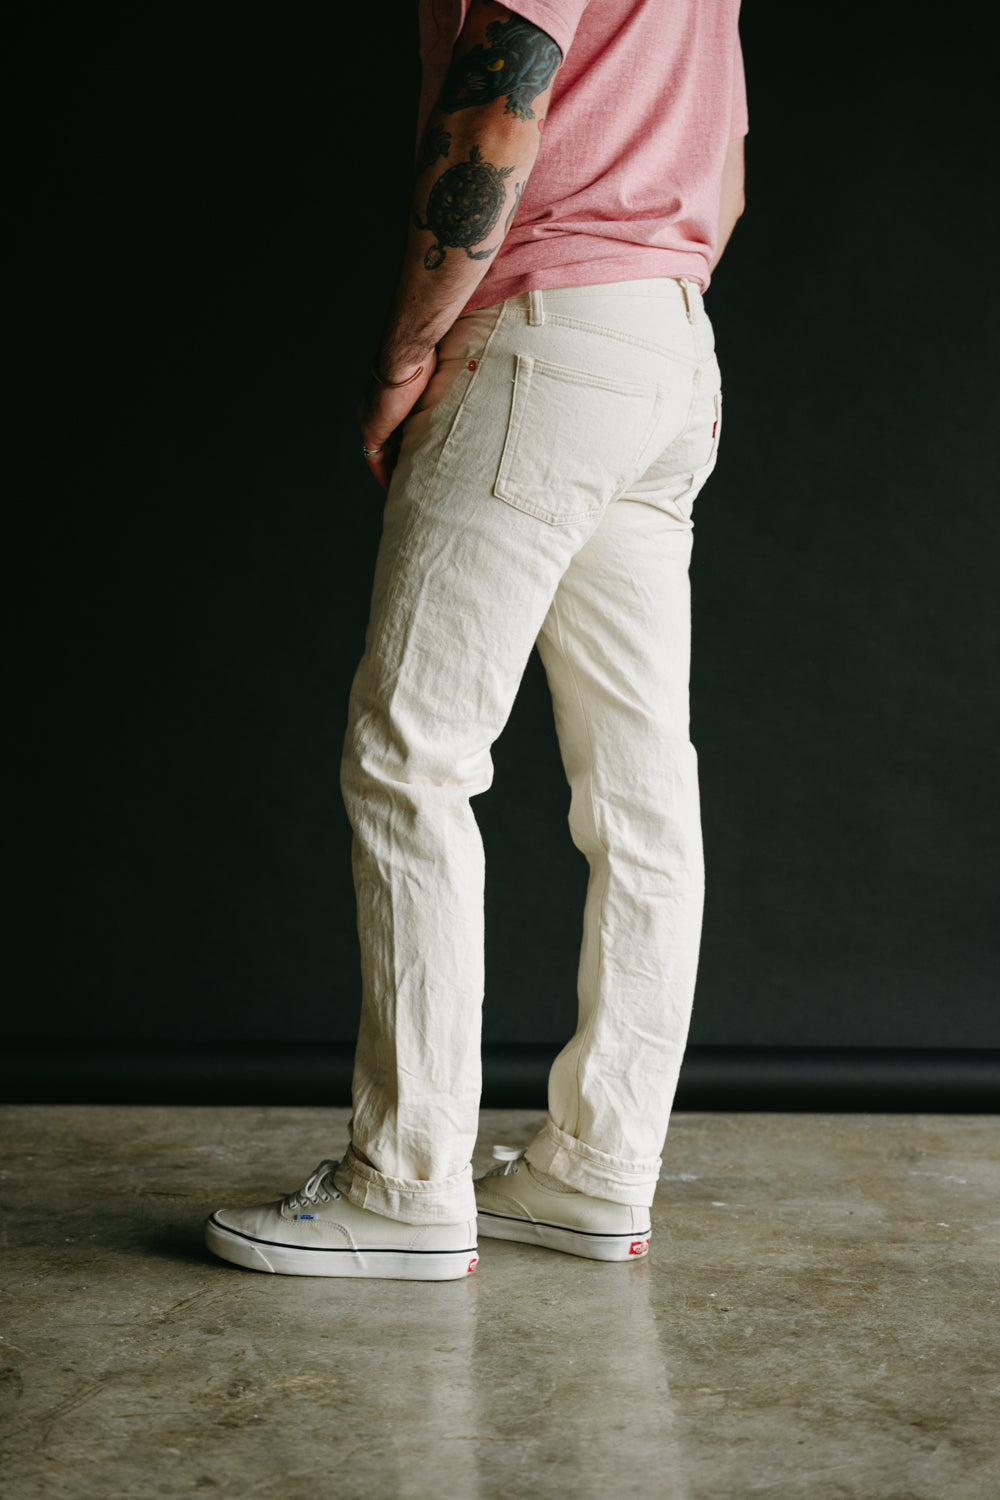 Lot 900XX - 13.5oz Slim Fit White Jeans - One Wash